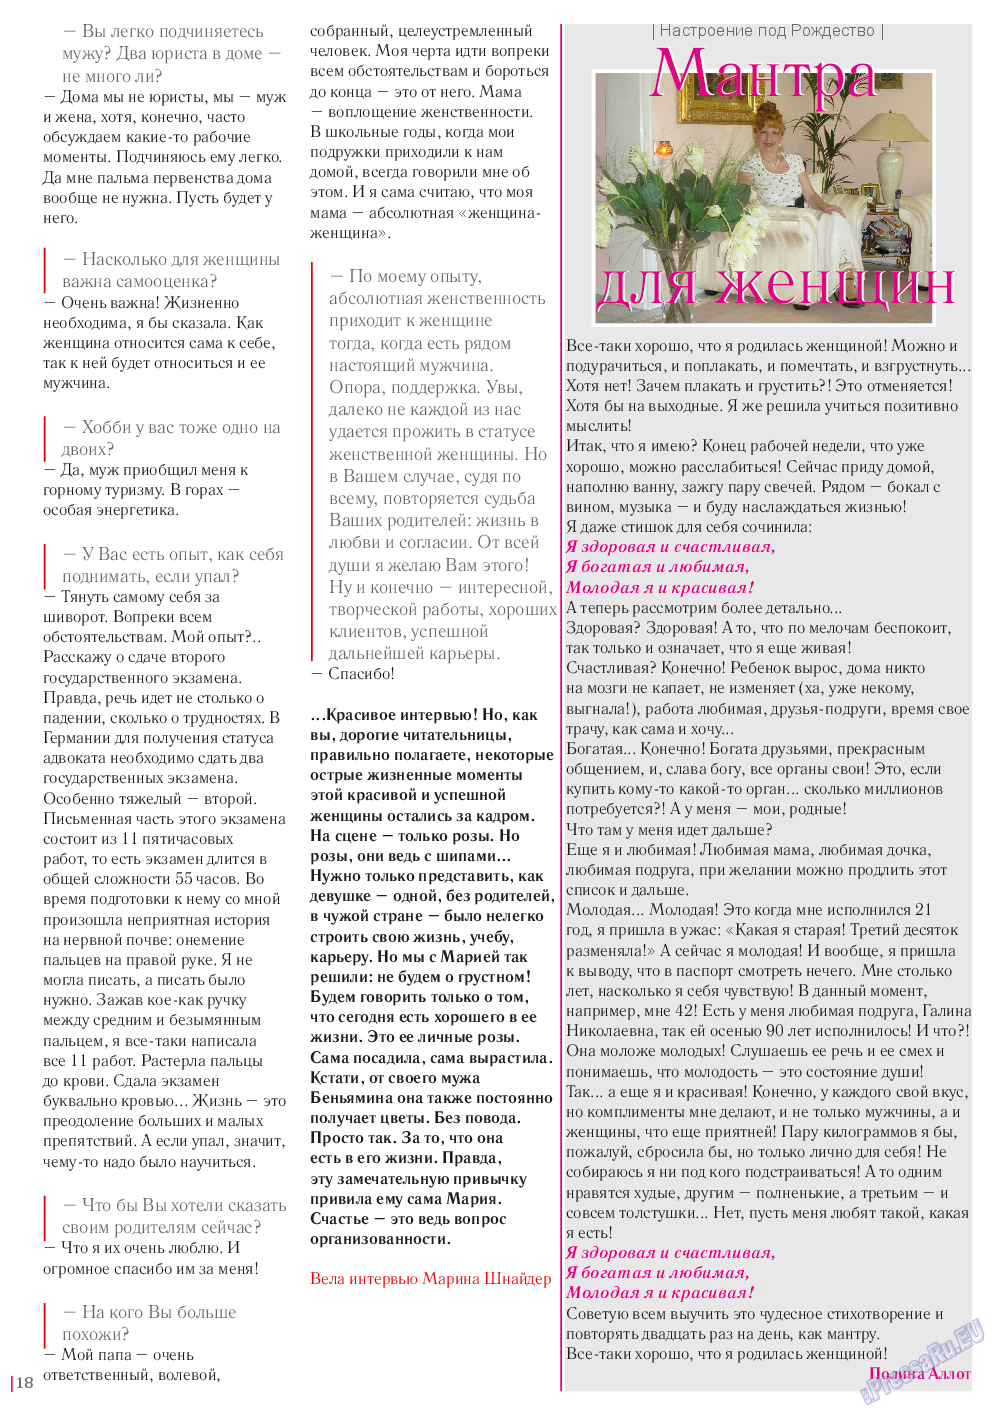 Катюша, журнал. 2016 №52 стр.18